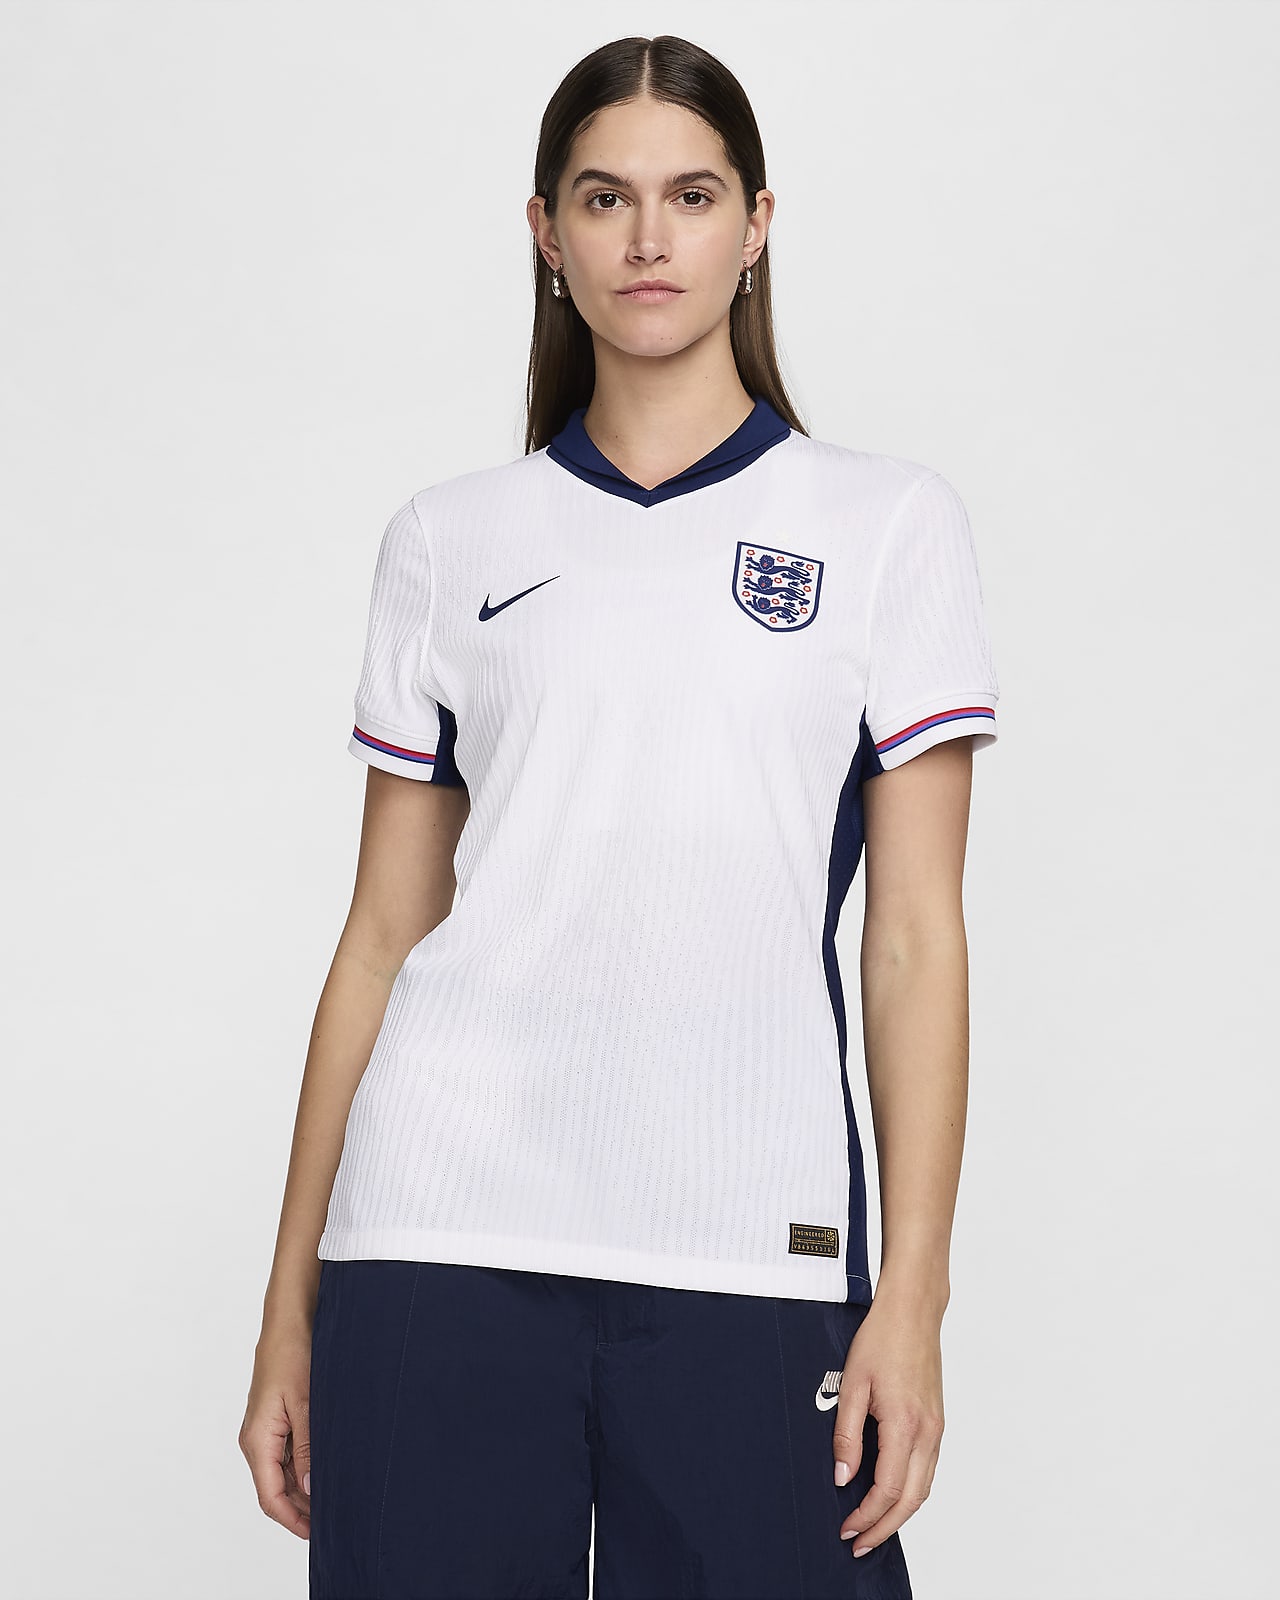 Dámský fotbalový dres Nike Dri-FIT ADV Authentic Anglie (mužský tým) 2024/25, zápasový/domácí